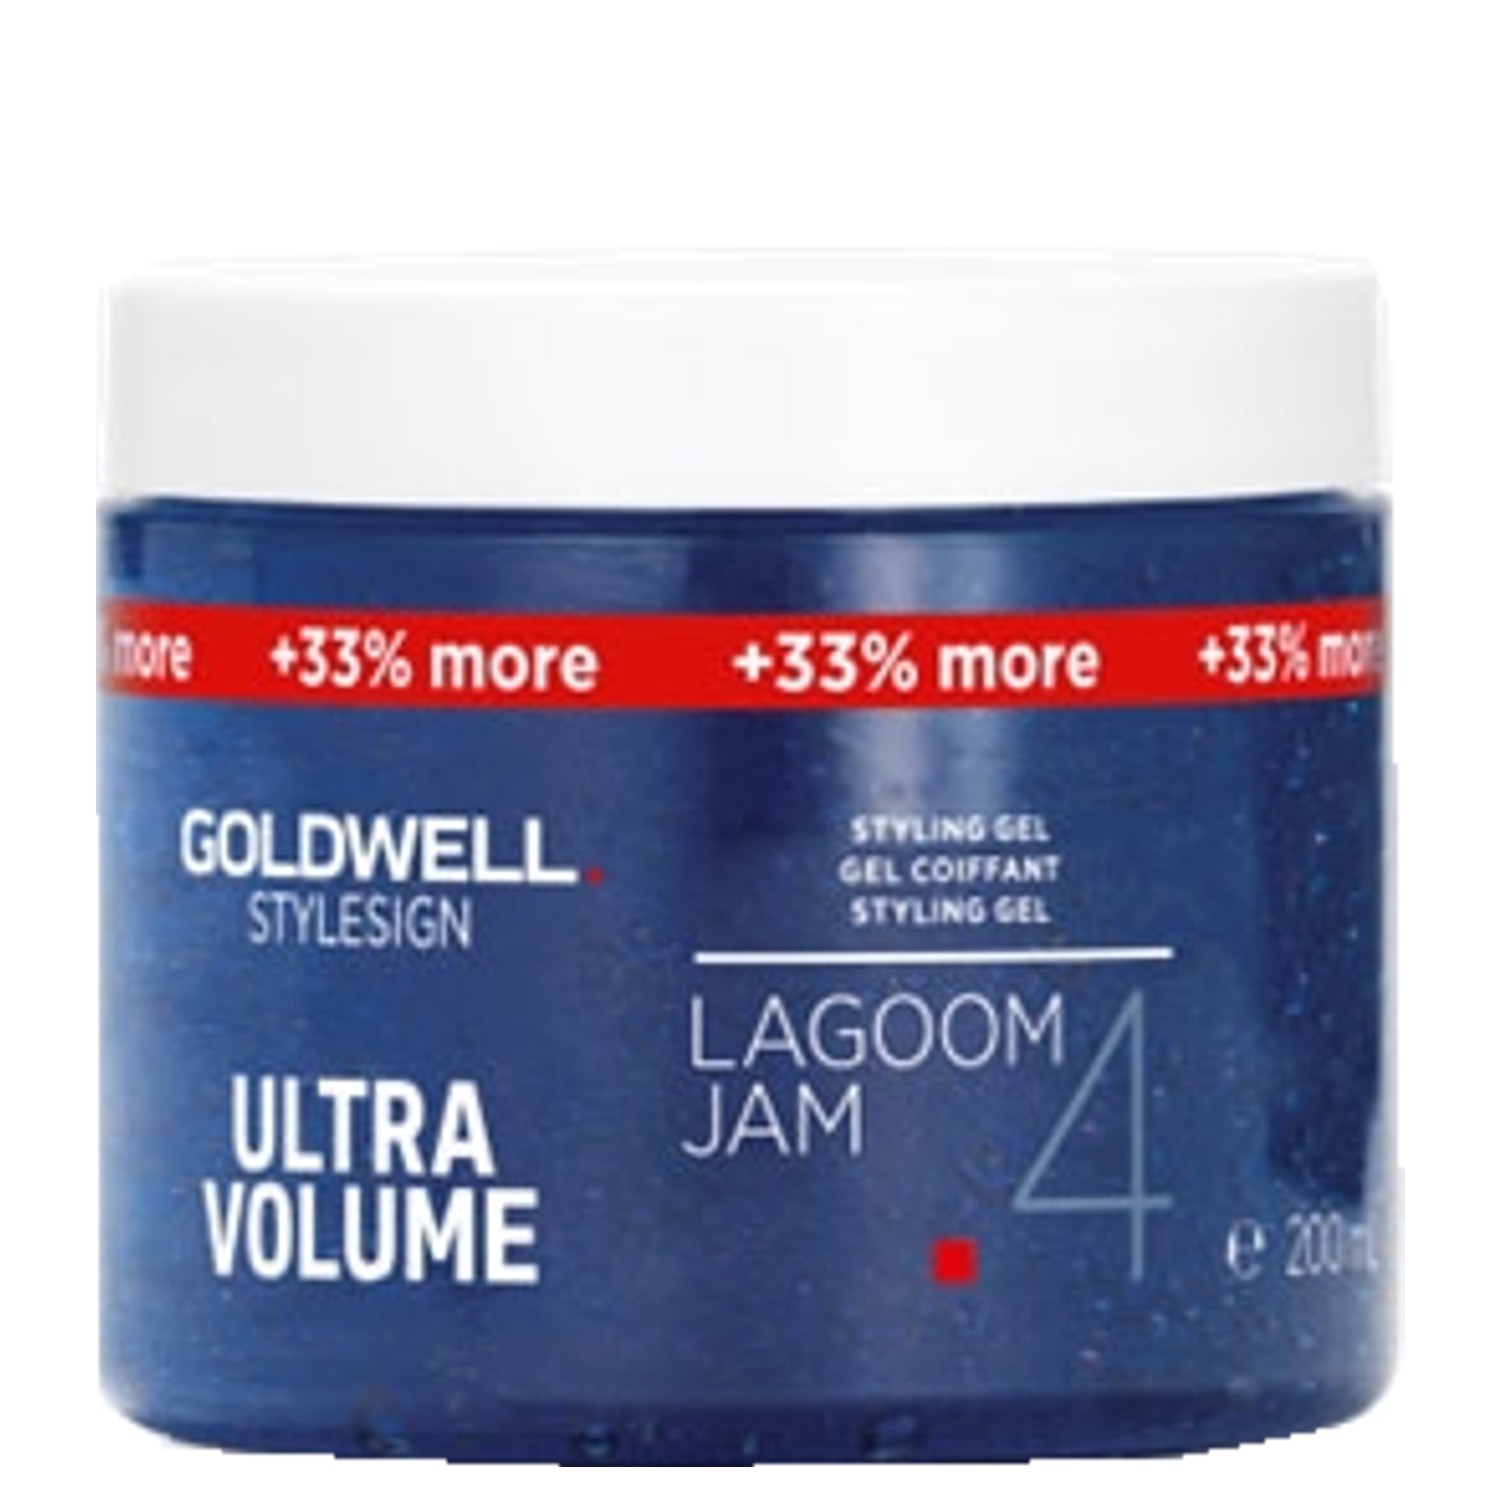 GOLDWELL Style Sign Ultra Volume LAGOOM JAM XXL 200 ml